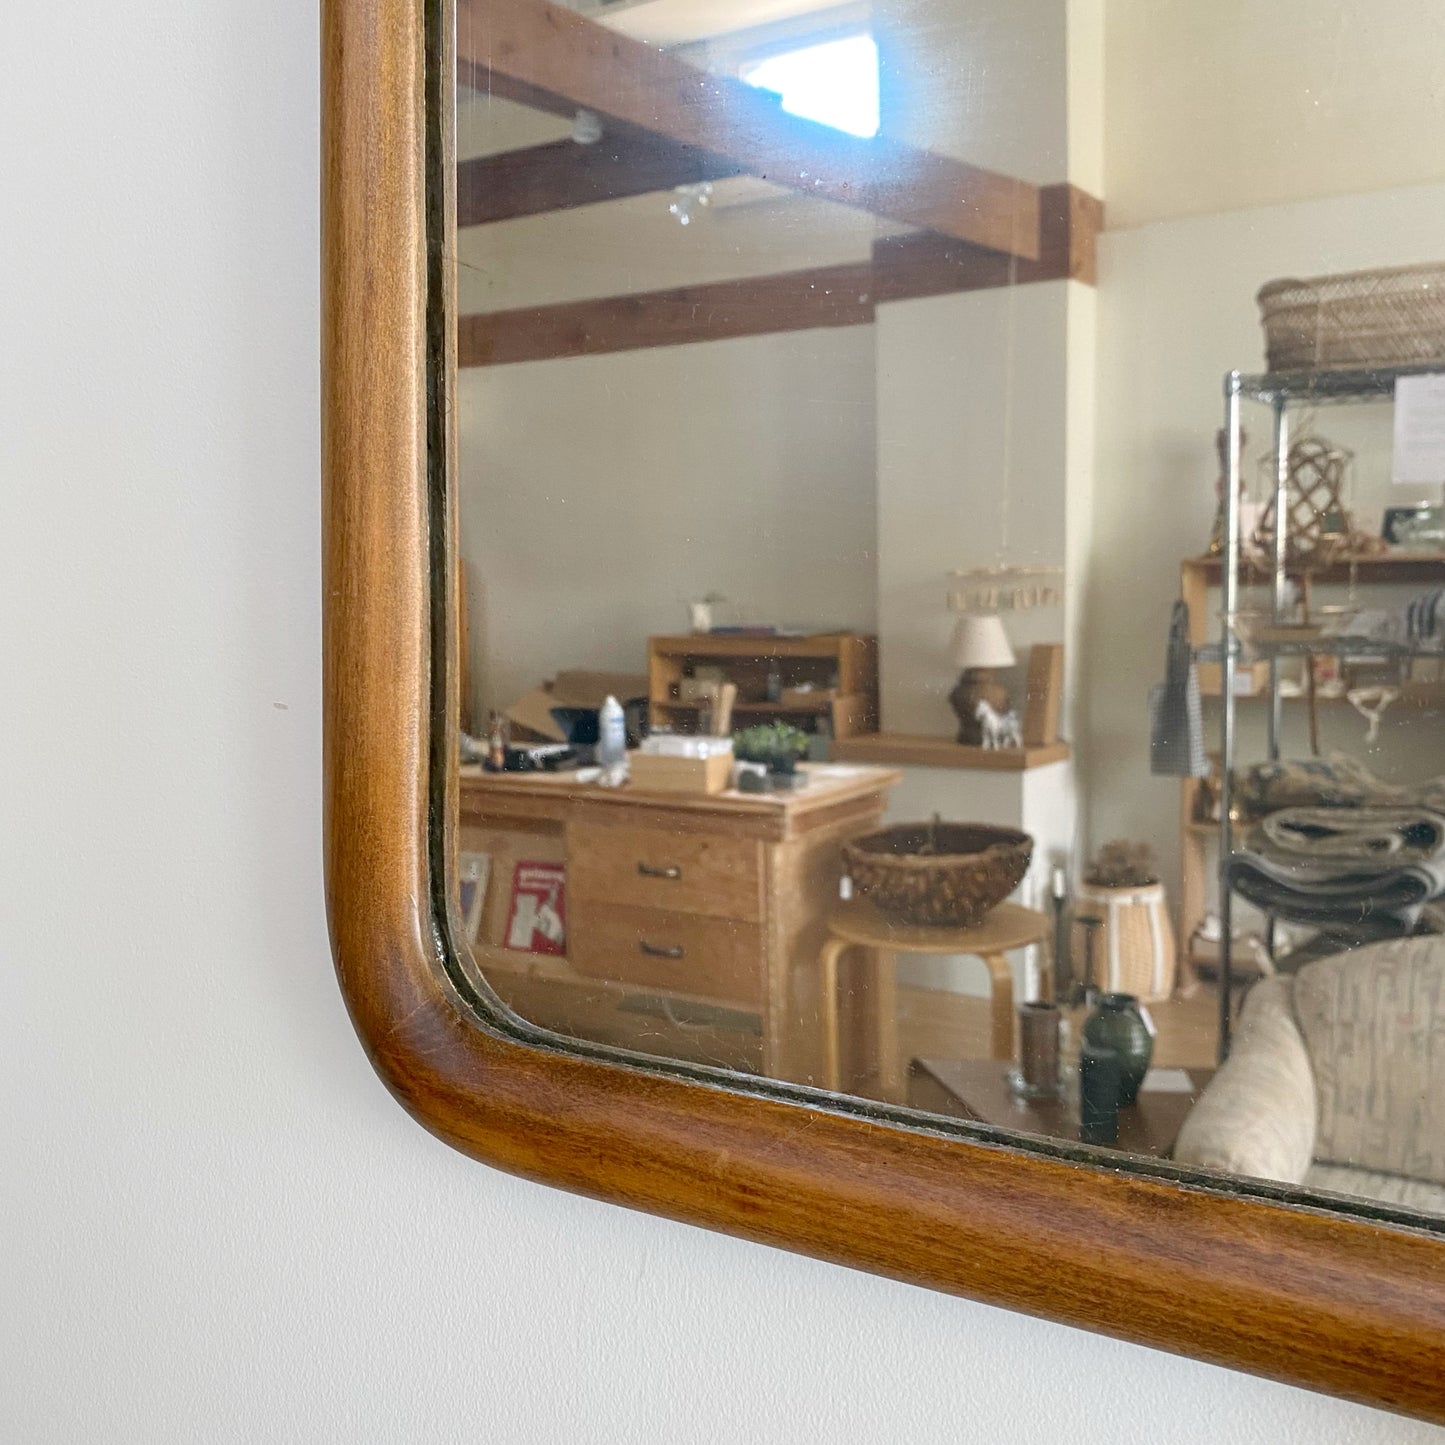 Antique “Wavy” Wood Framed Mirror